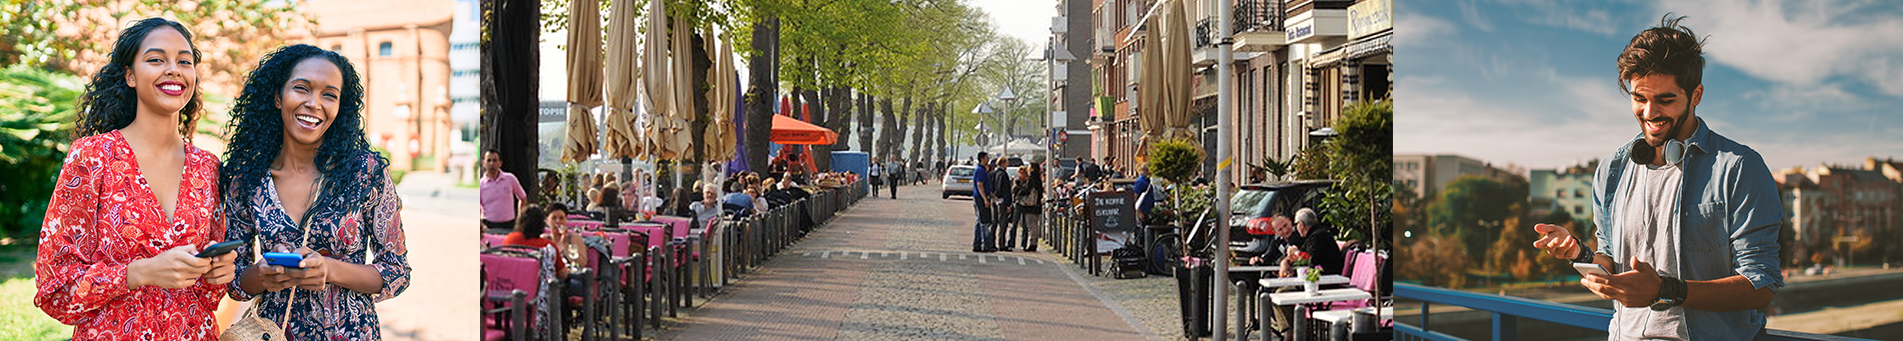 Citygames Arnhem